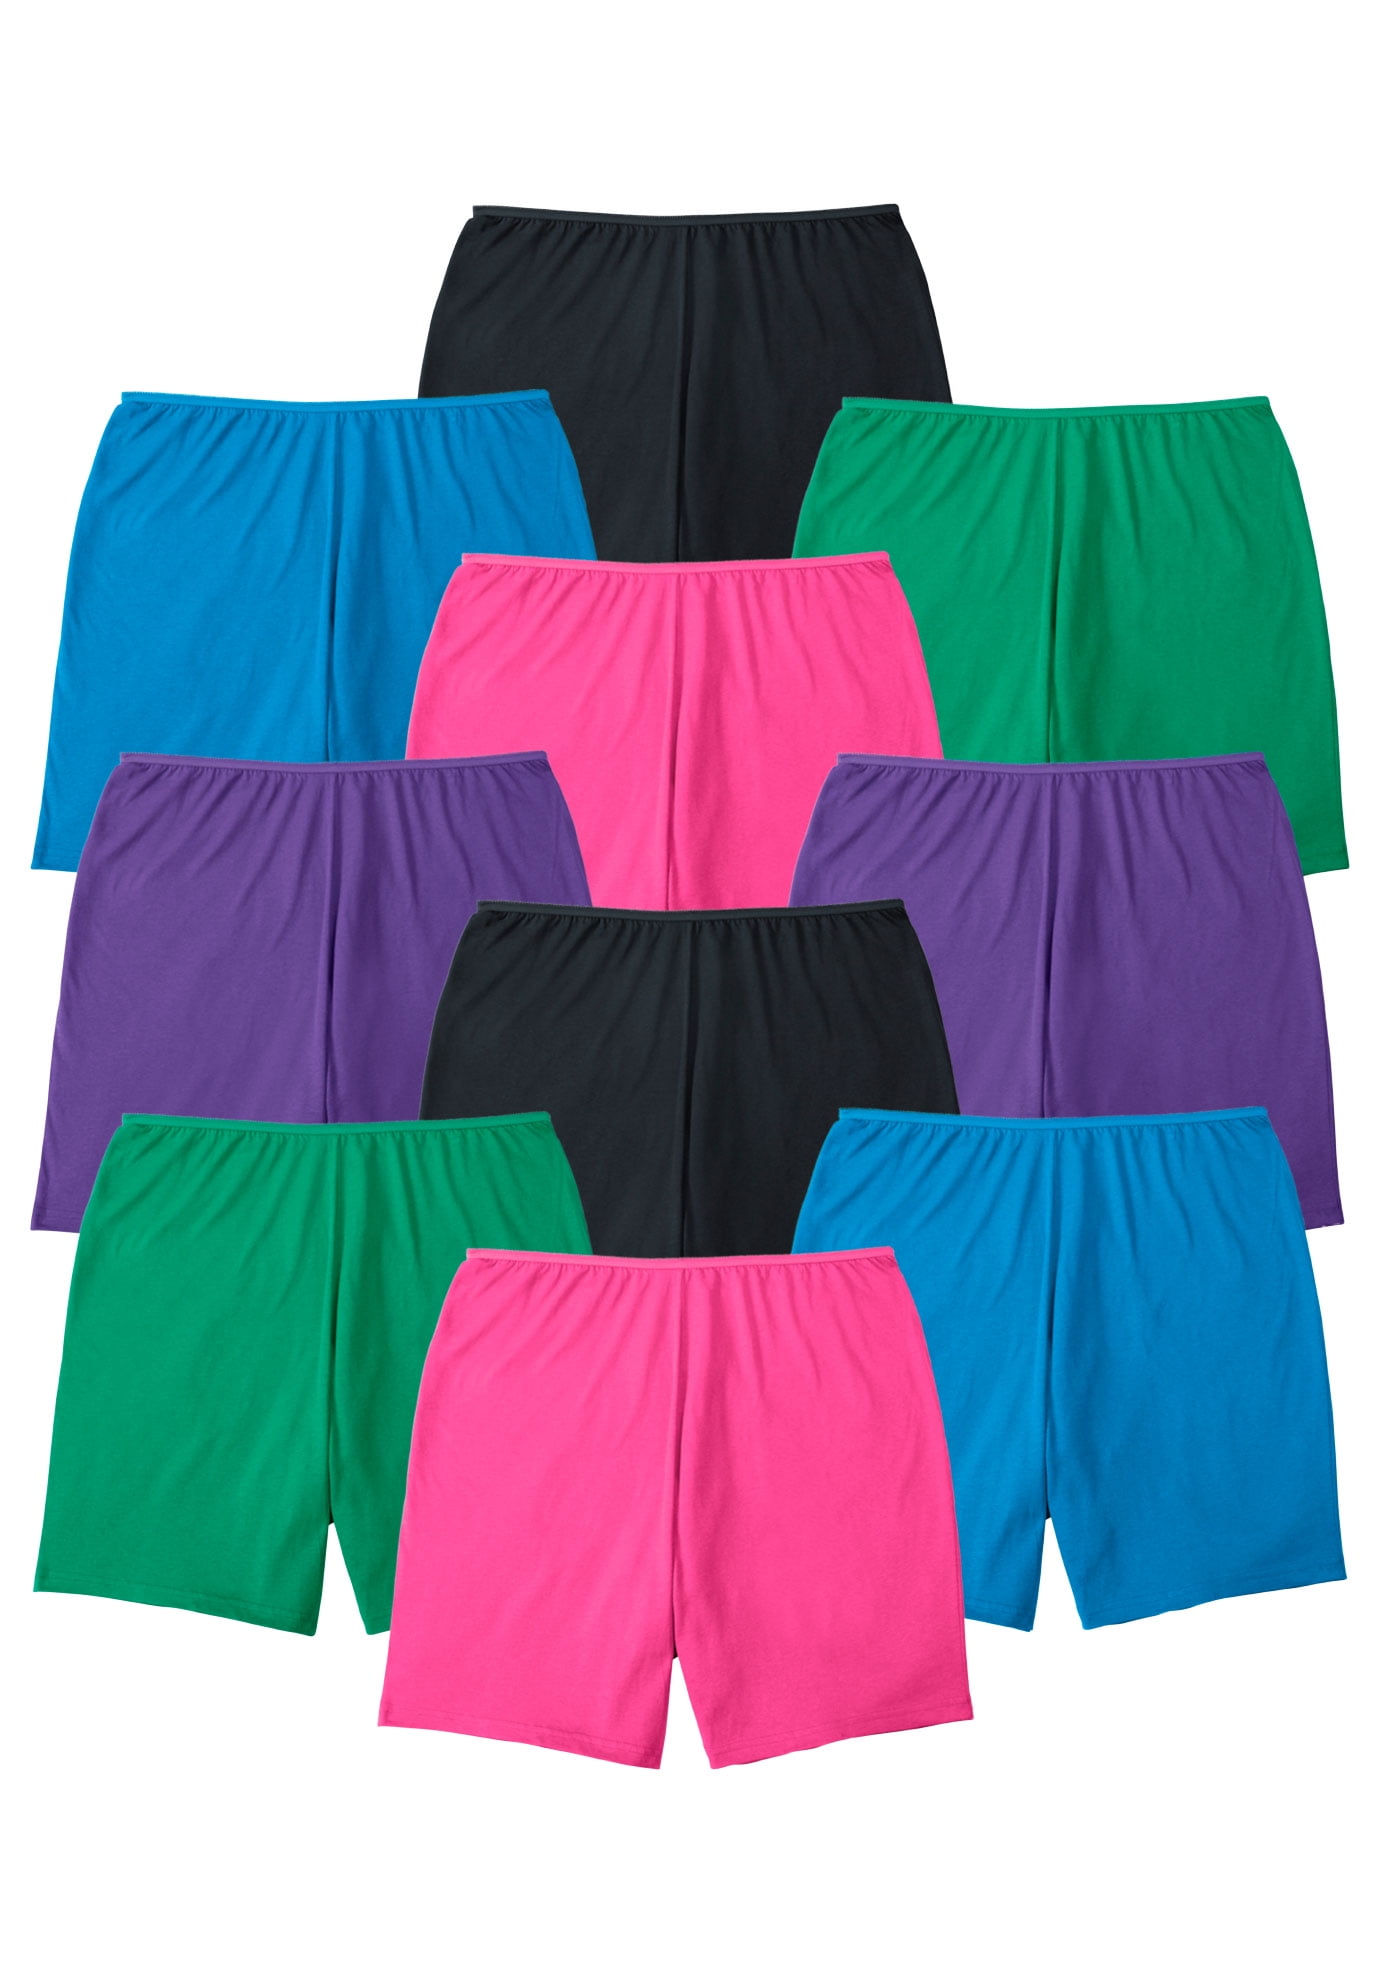 Basic Pack Comfort Choice Womens Plus Size Comfort Choice 10-Pack Cotton Boyshort 12